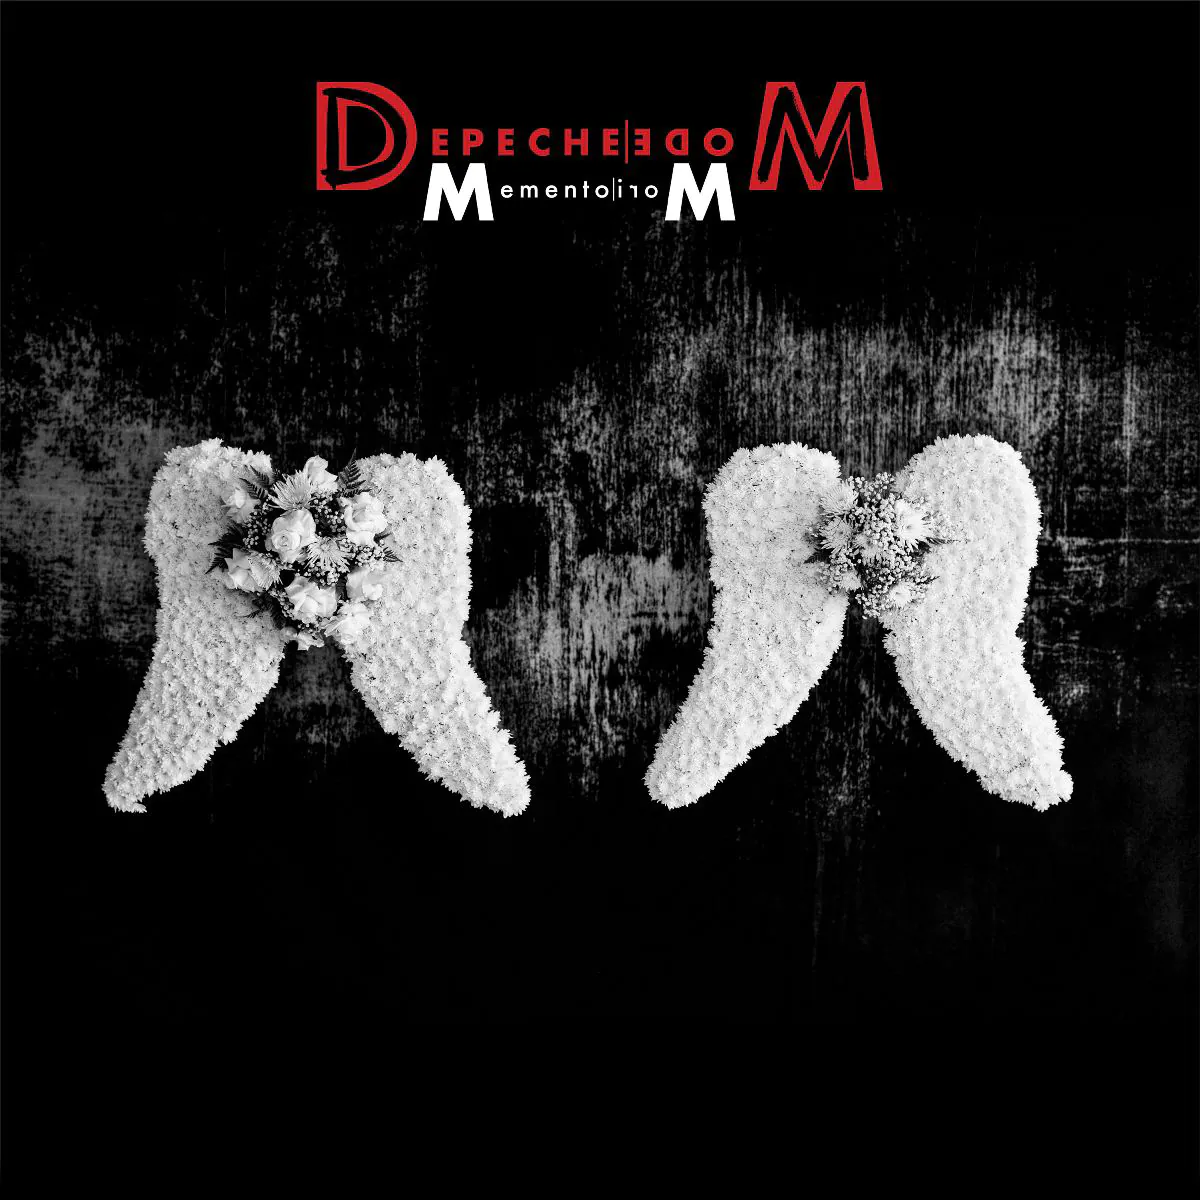 ALBUM REVIEW: Depeche Mode – Memento Mori